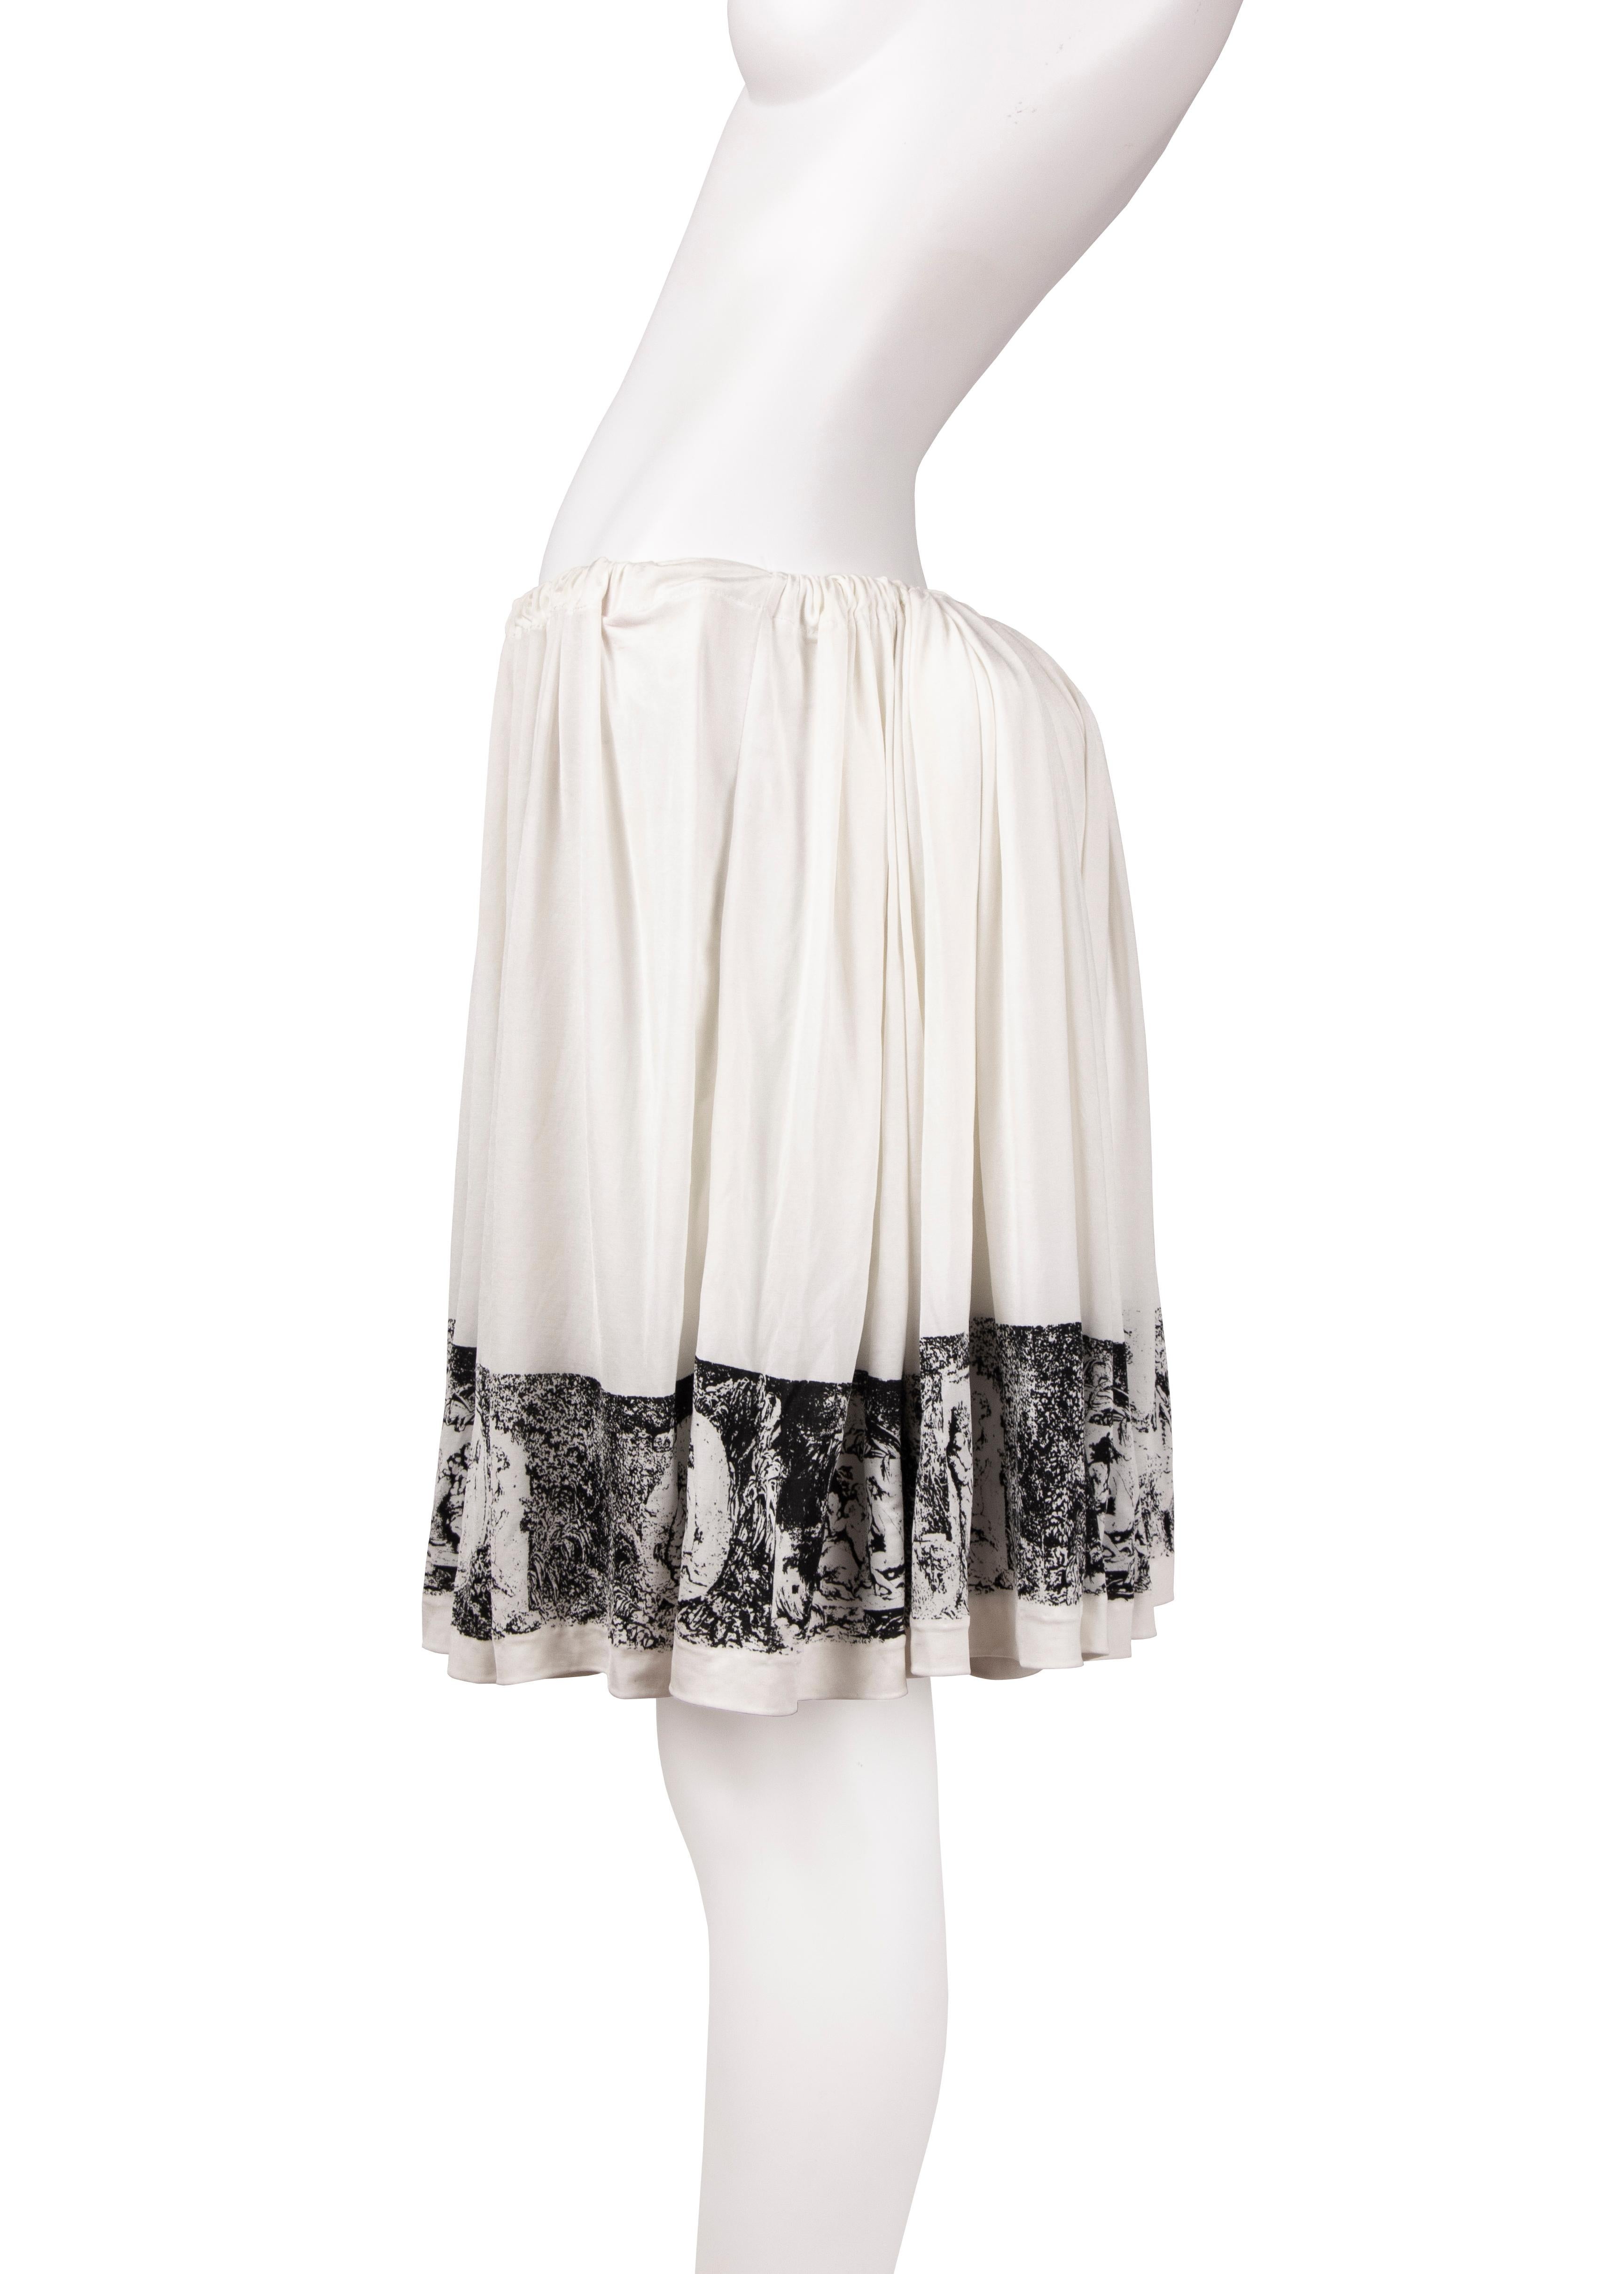 Women's Vivienne Westwood 'Pagan' bustle skirt, ss 1988